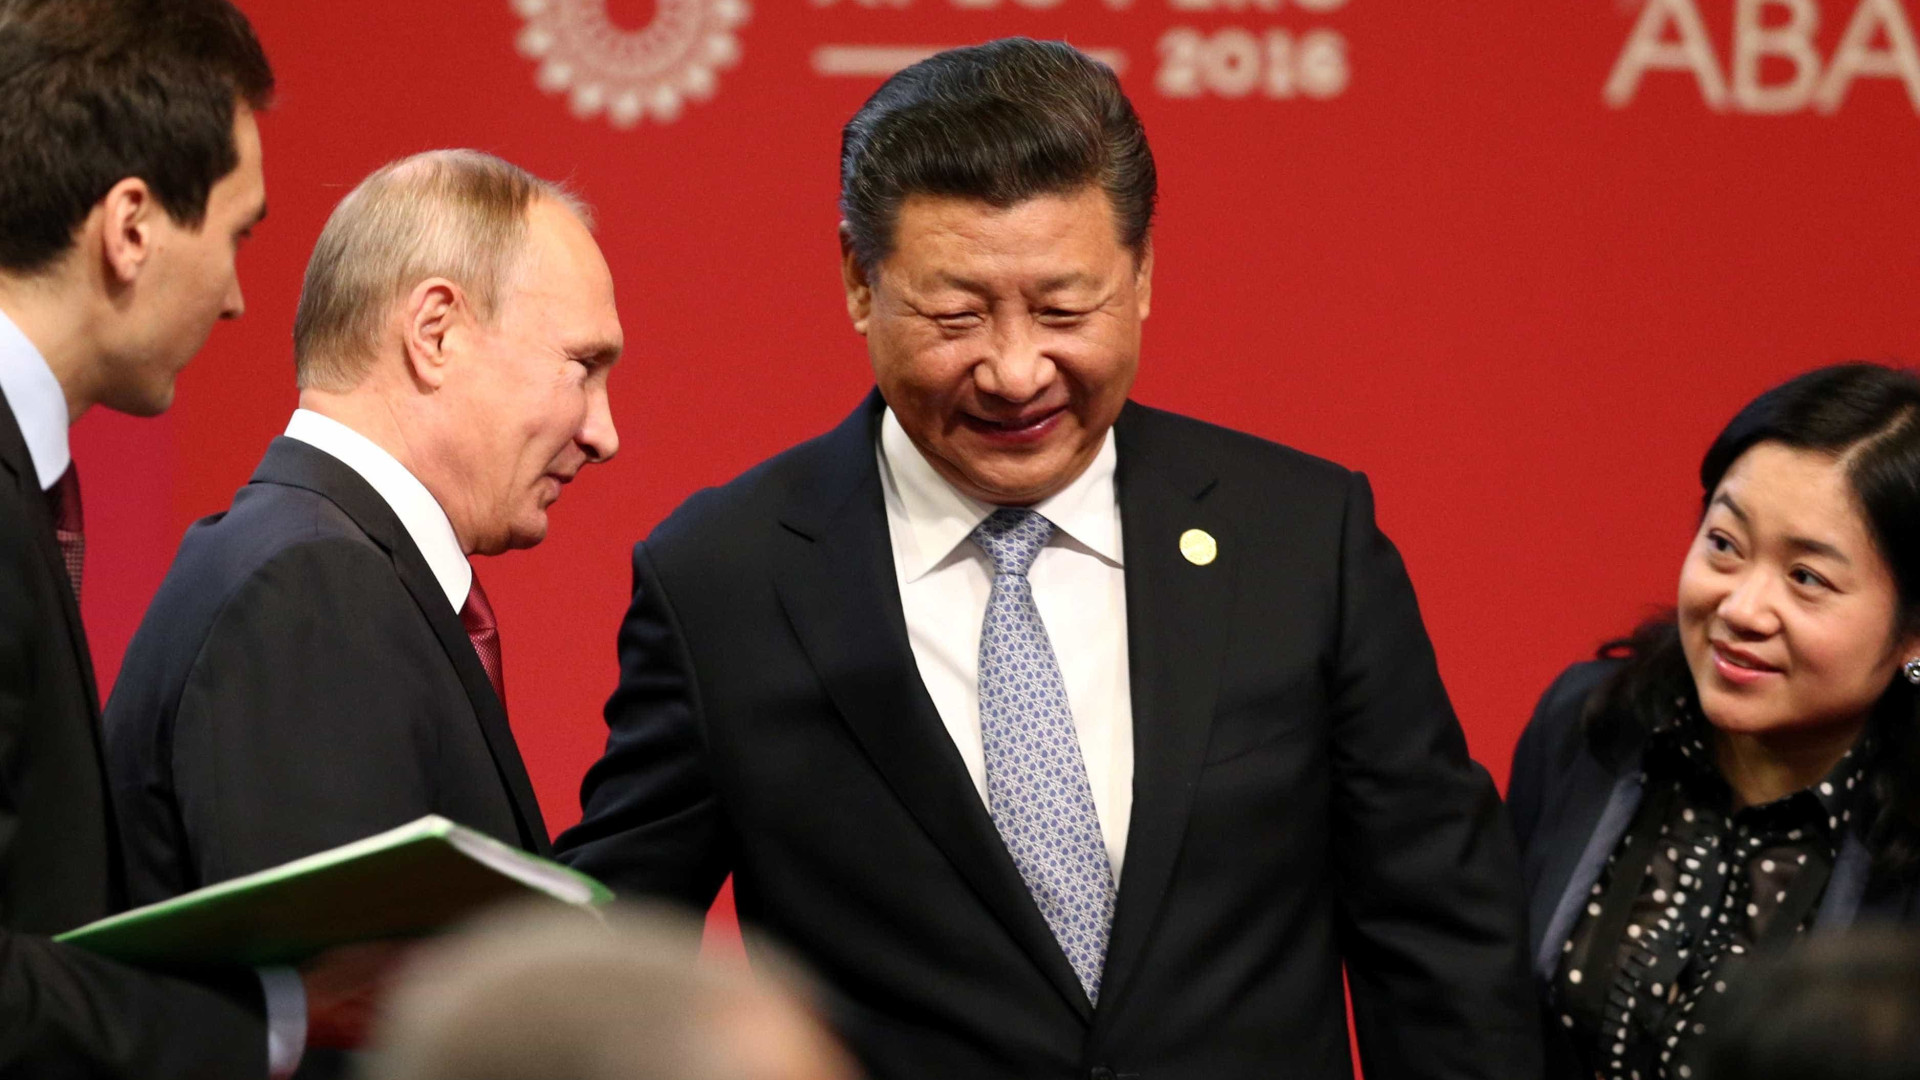 Putin anuncia possível visita à China para 2017